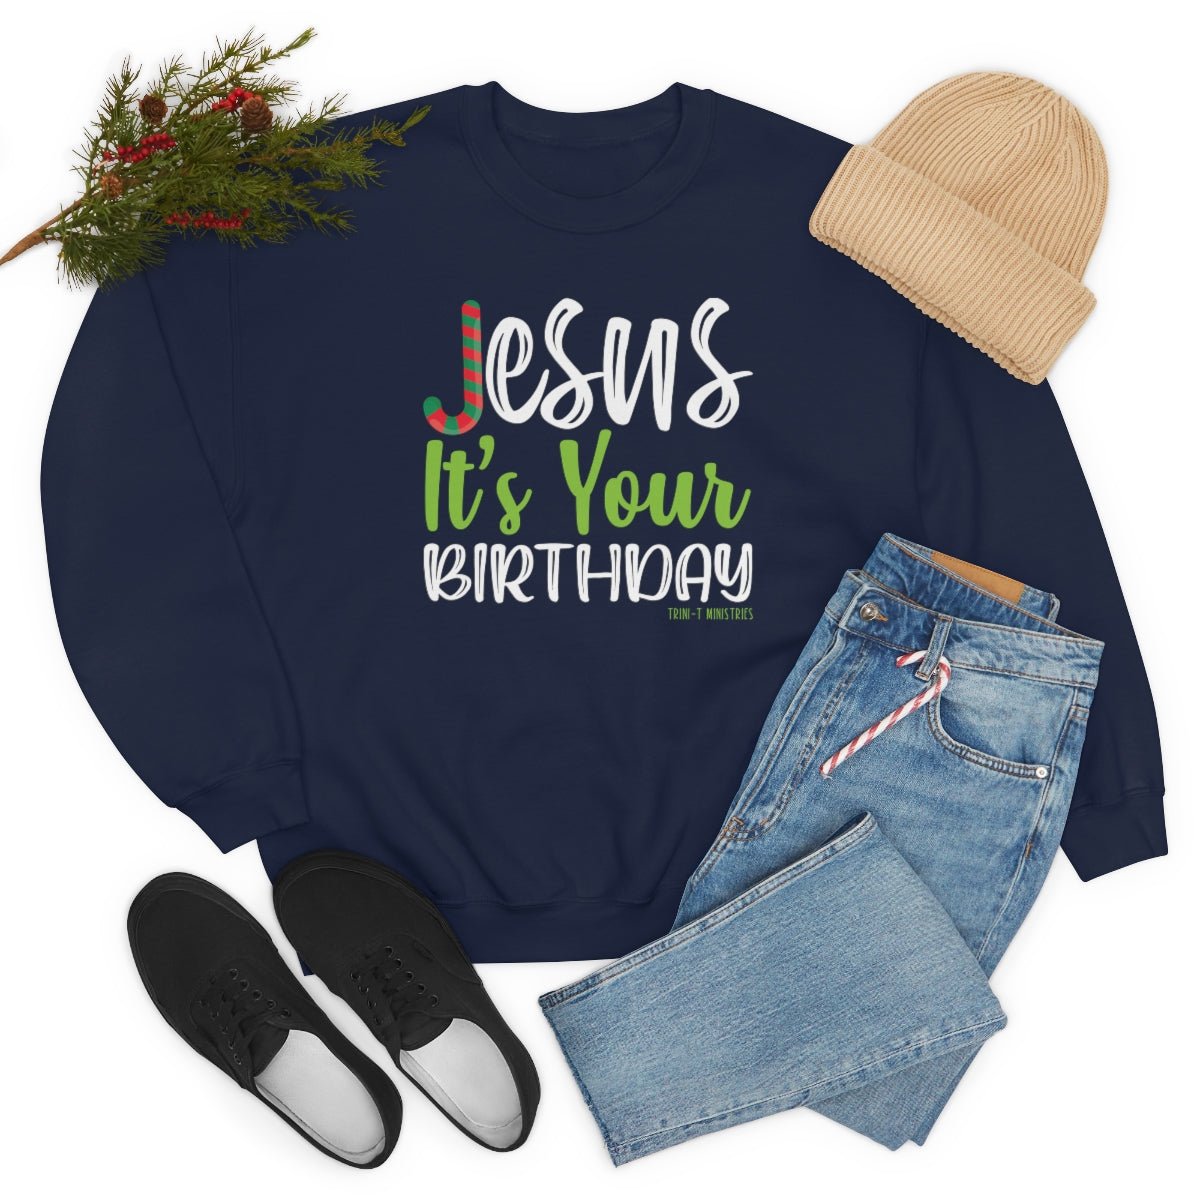 Jesus' Birthday - Sweatshirt - Trini-T Ministries